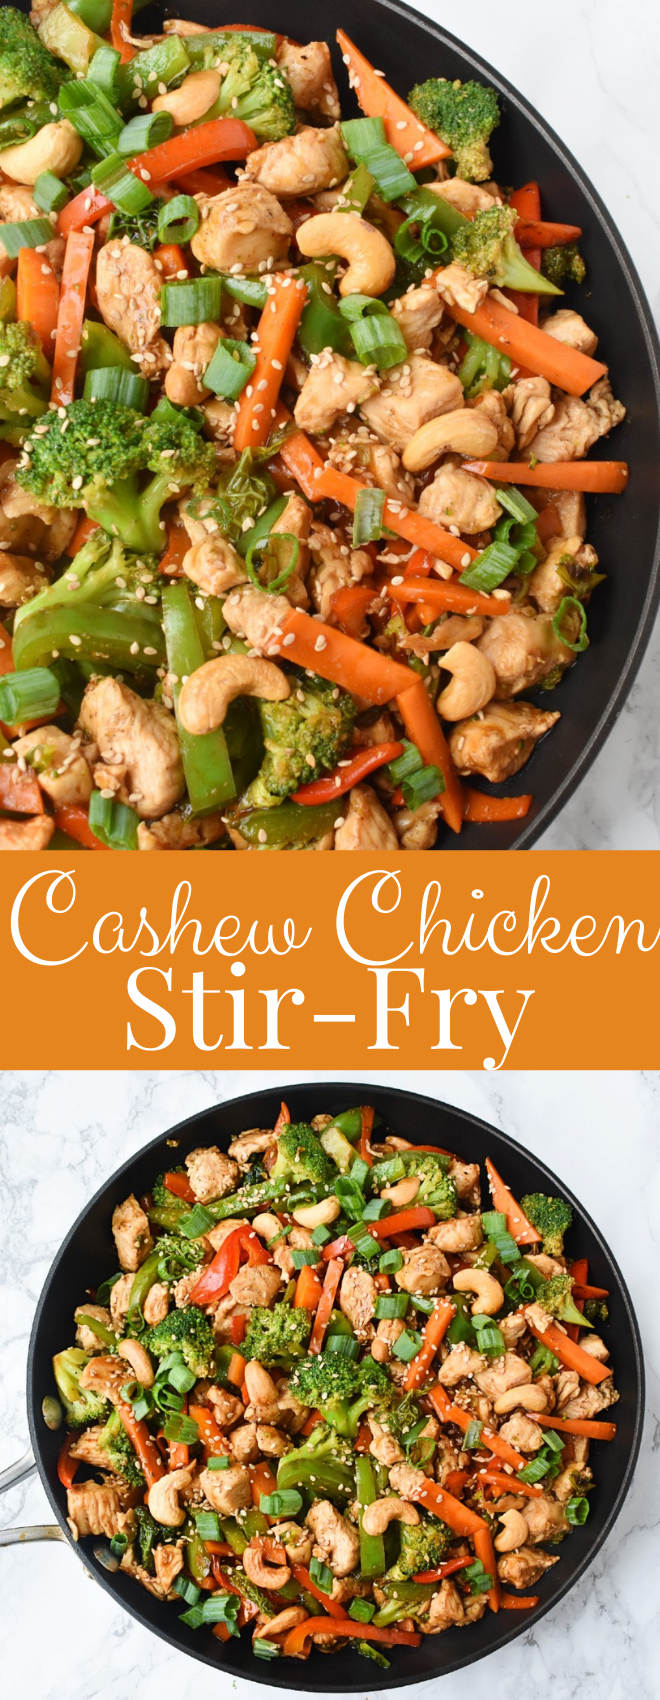 Cashew Chicken Stir-Fry | The Nutritionist Reviews